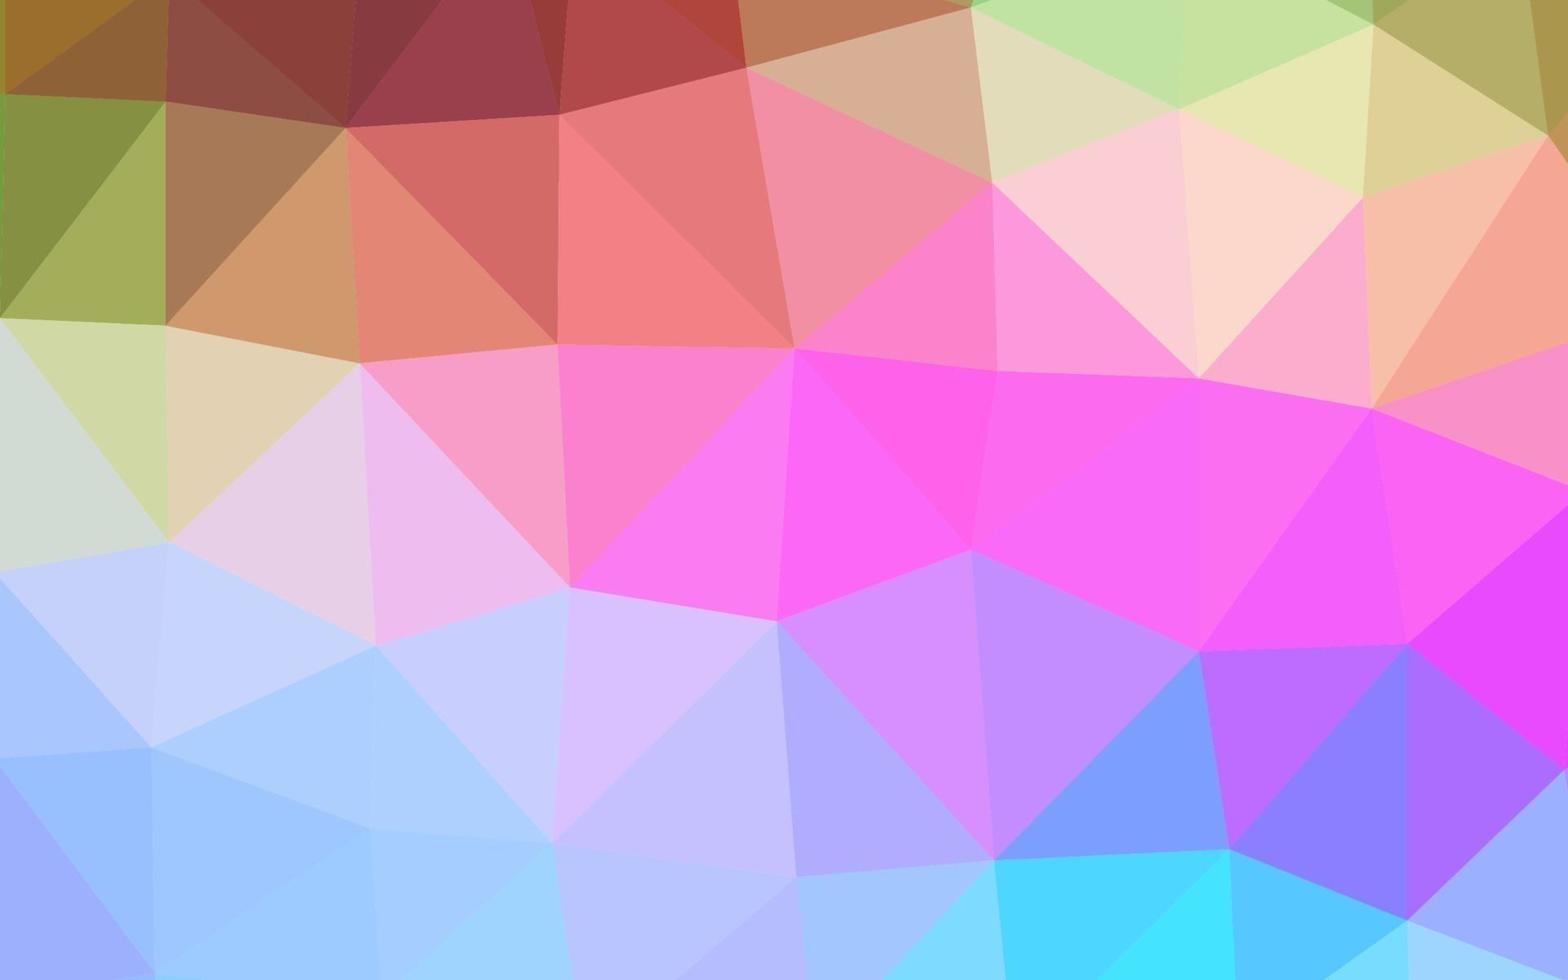 ljus mångfärgad, regnbåge vektor polygonal mall.